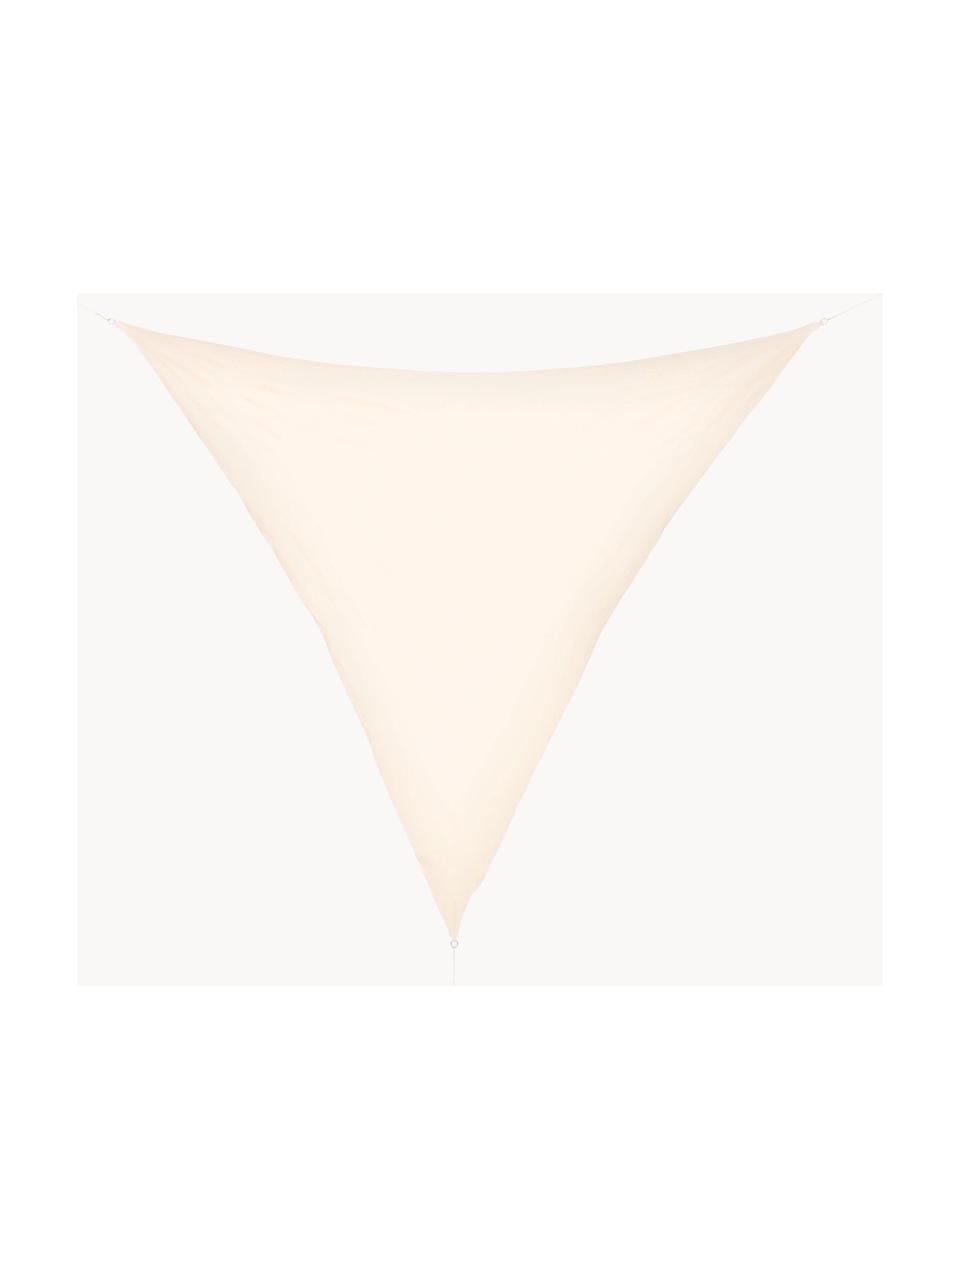 Toldo / vela triangular 360 x 360 x 360 cm - color blanco